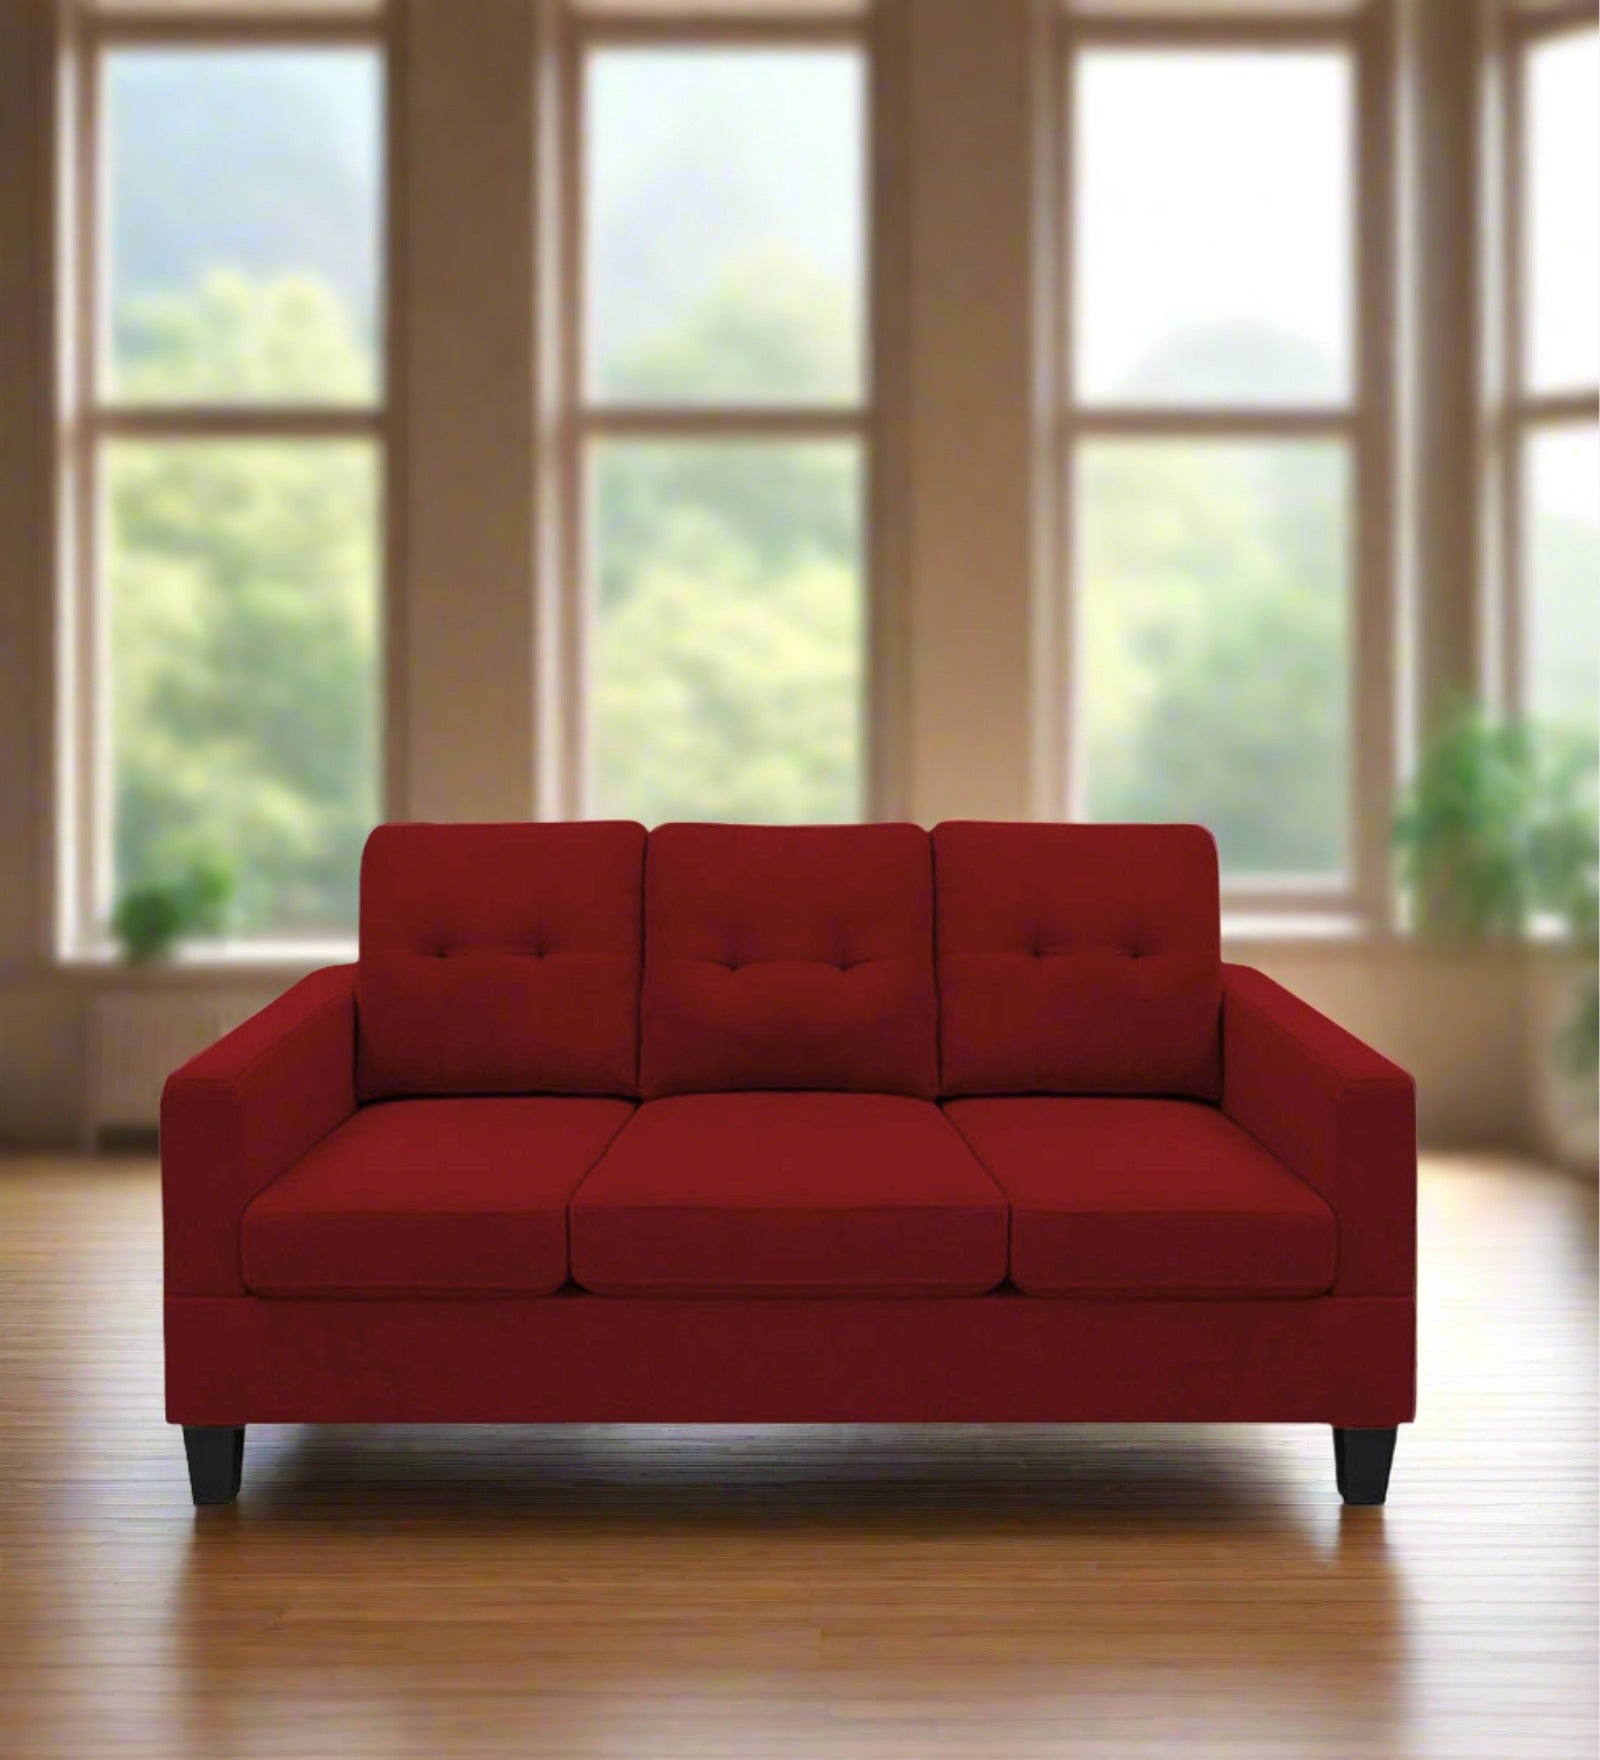 Thomas Fabric 3 Seater Sofa in Blood Maroon Colour